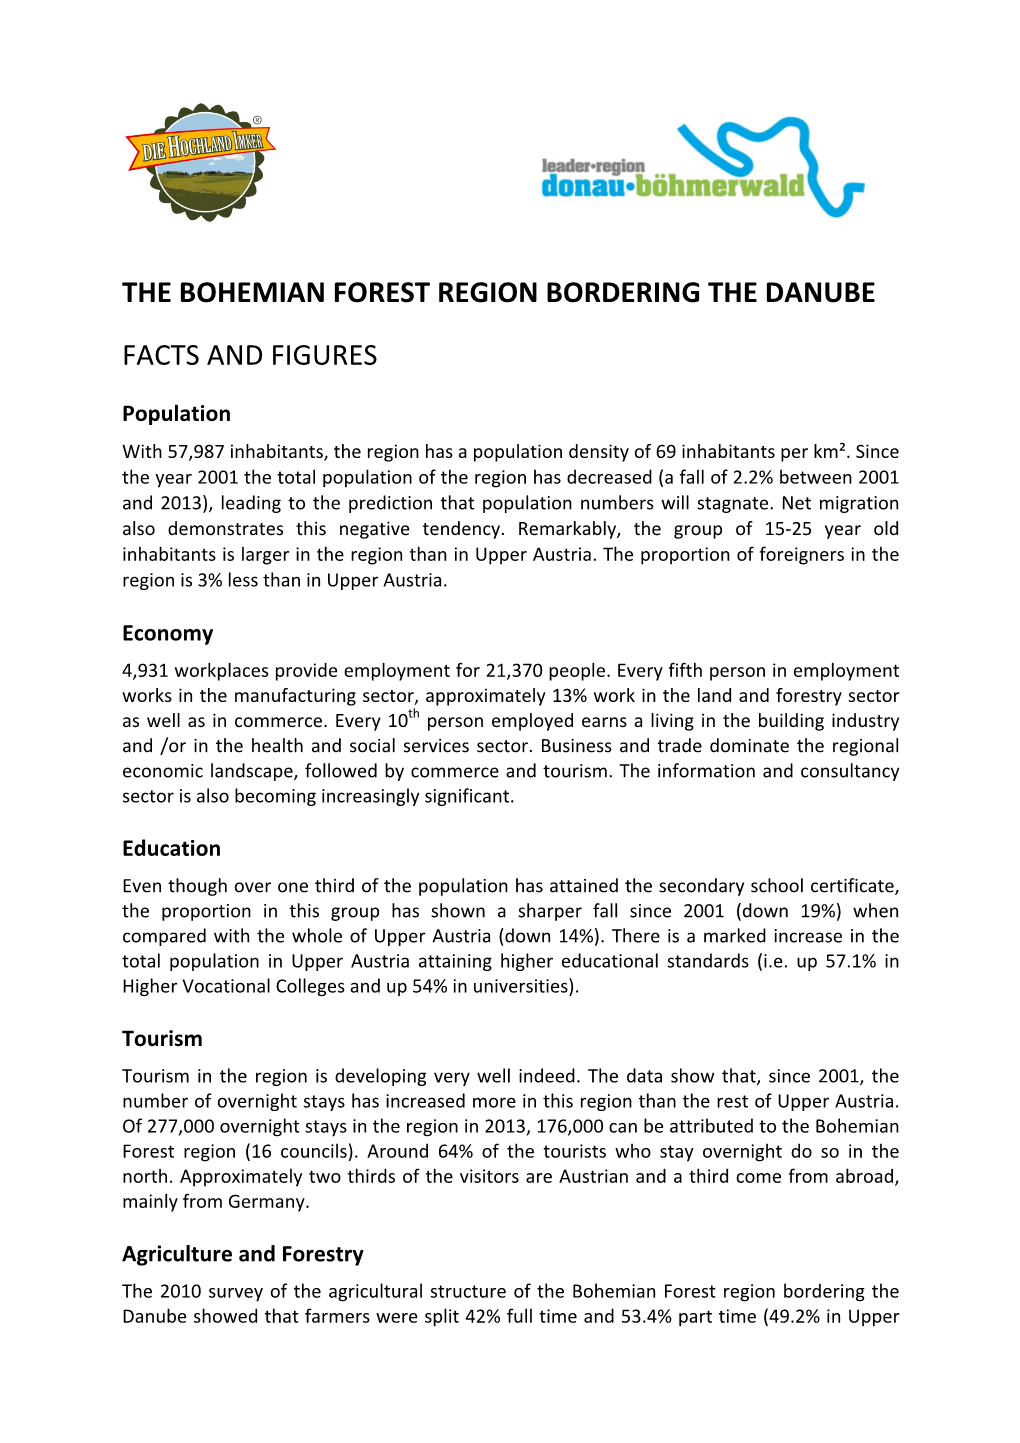 The Bohemian Forest Region Bordering the Danube